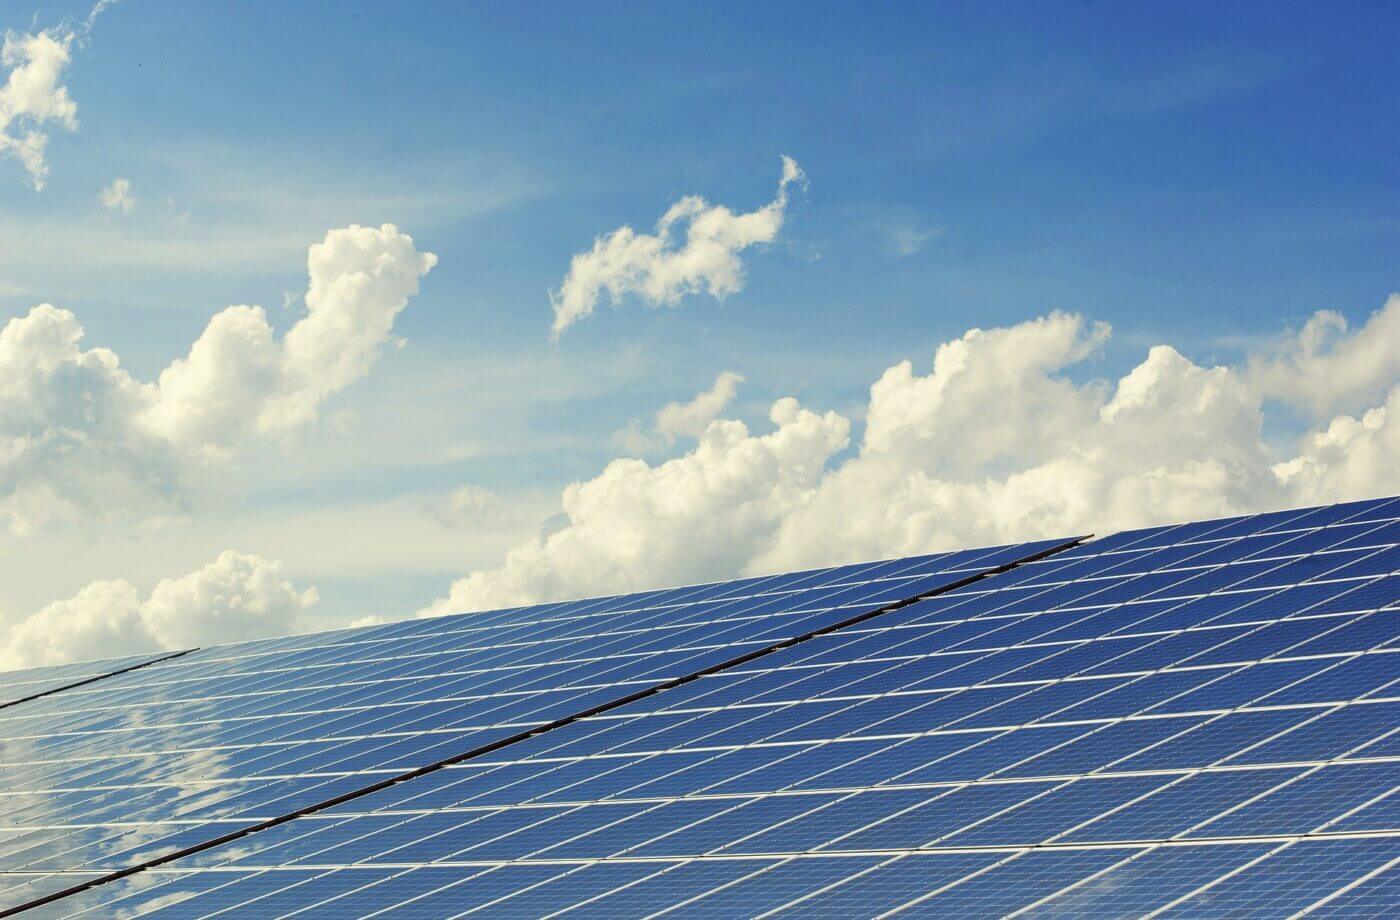 Solar panels to help survive a power grid failure